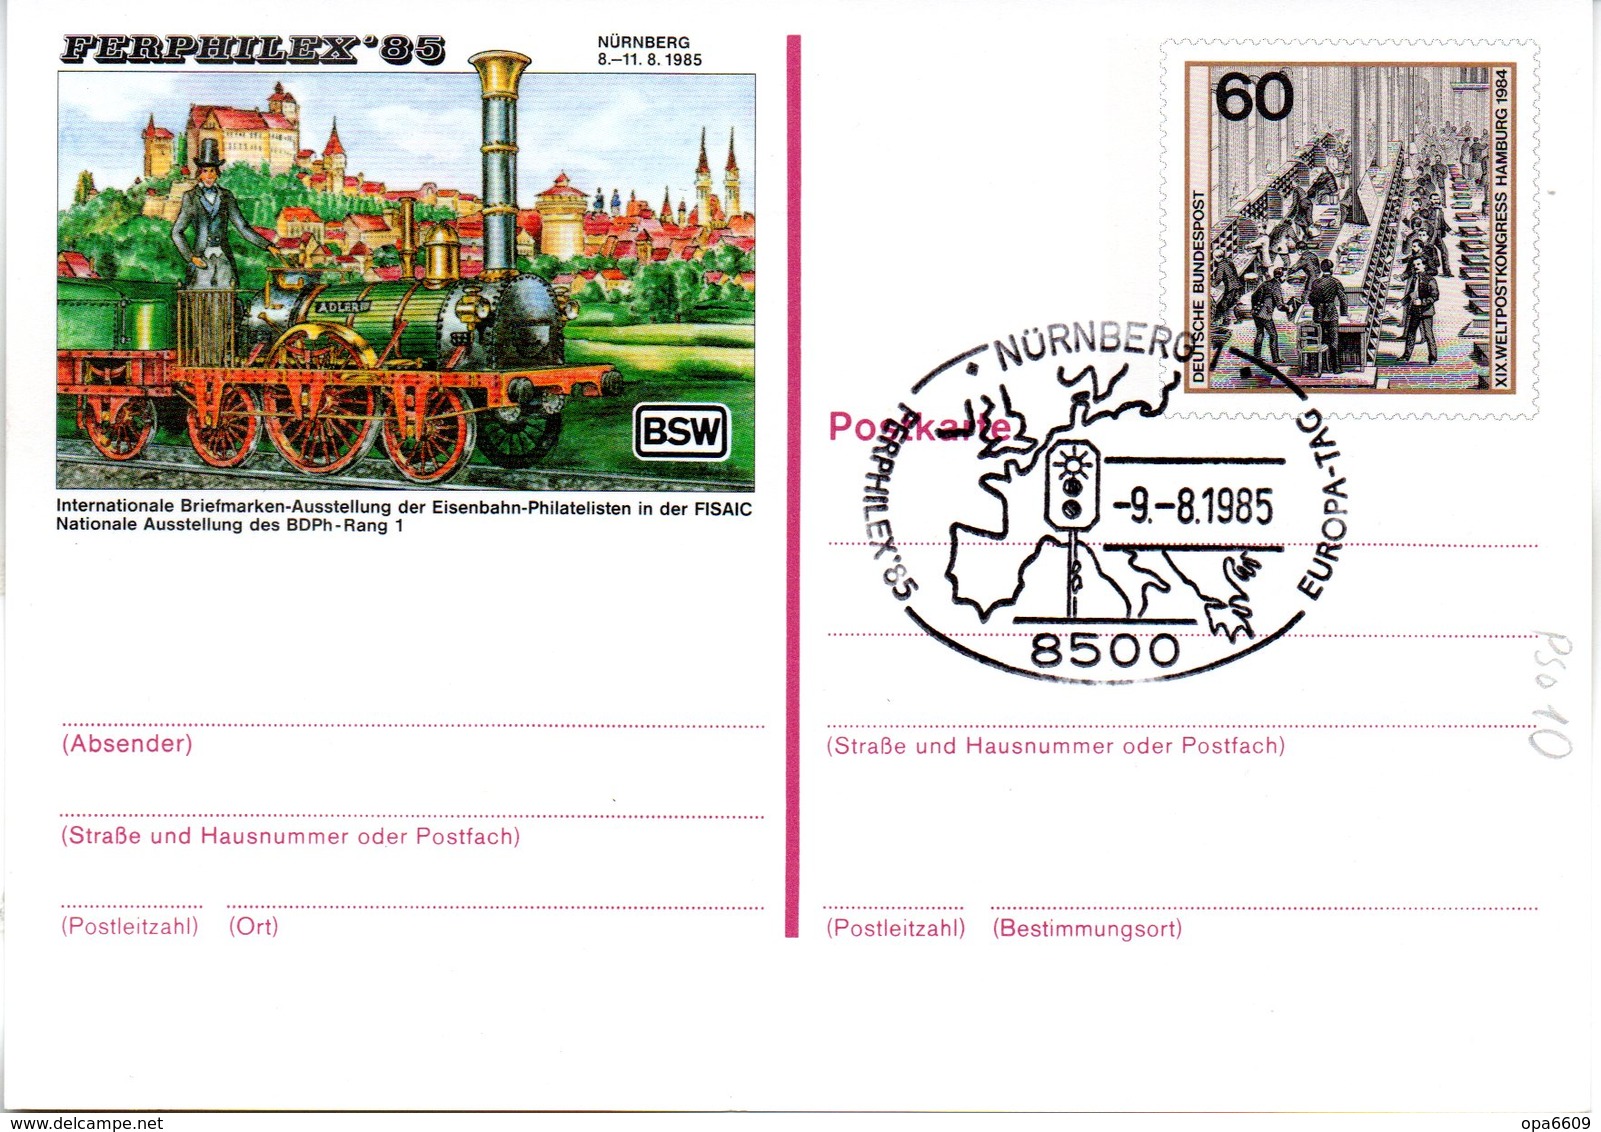 BRD Amtliche GZS-Sonderpostkarte PSo 10 "FERPHILEX'85 In Nürnberg" WSt "XIX. Weltpostkongreß.., SSt 9.8.1985 NÜRNBERG - Postkarten - Gebraucht